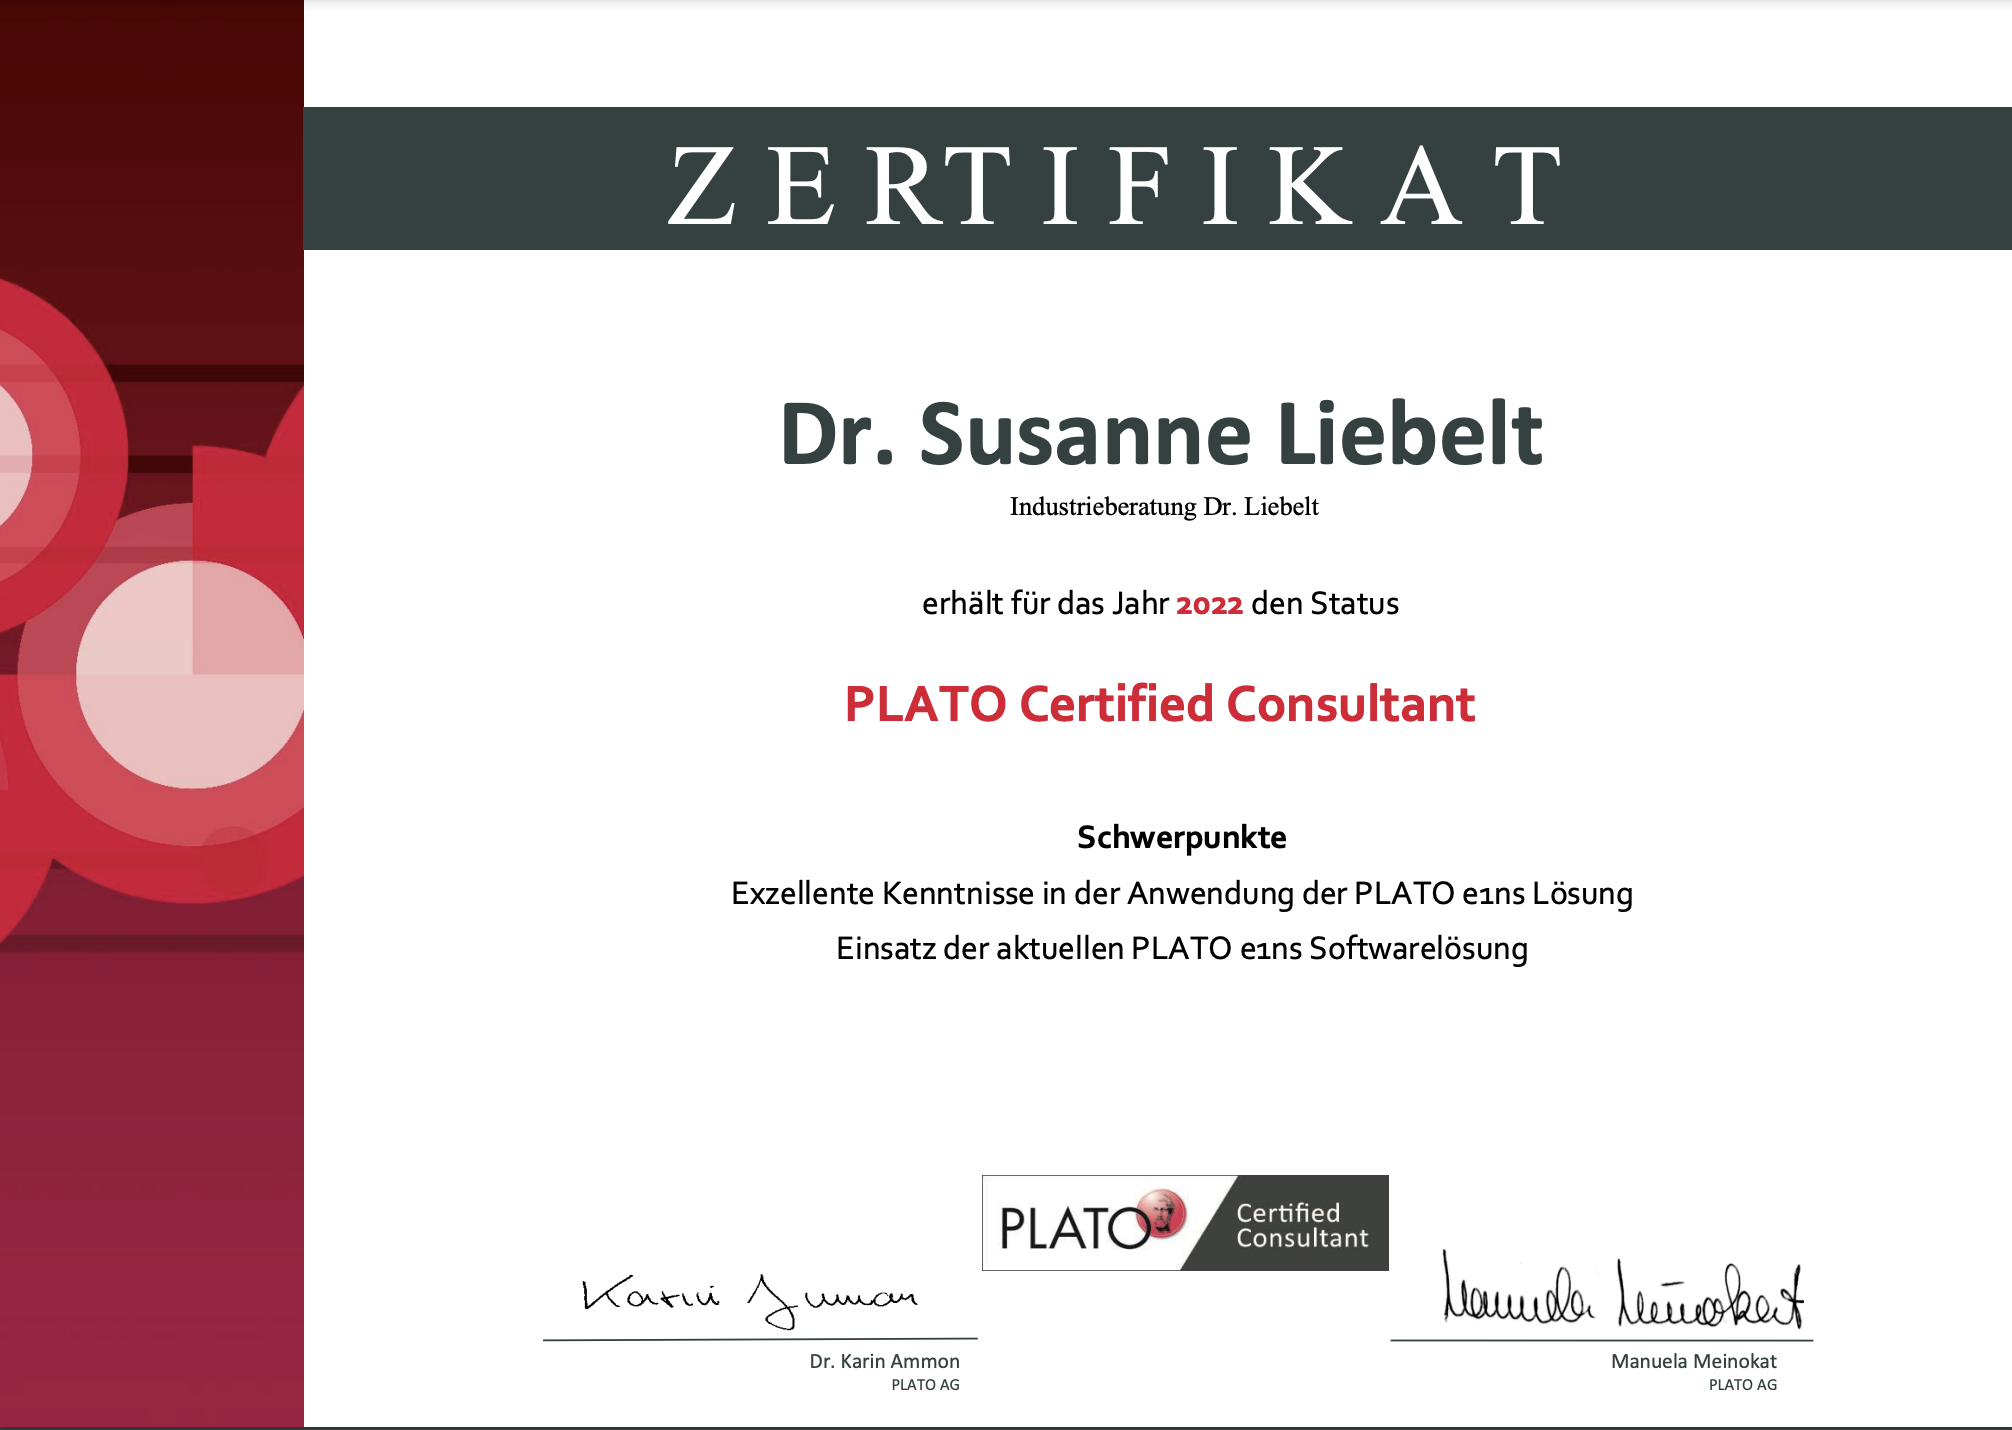 Plato Zertifikat Susanne Liebelt